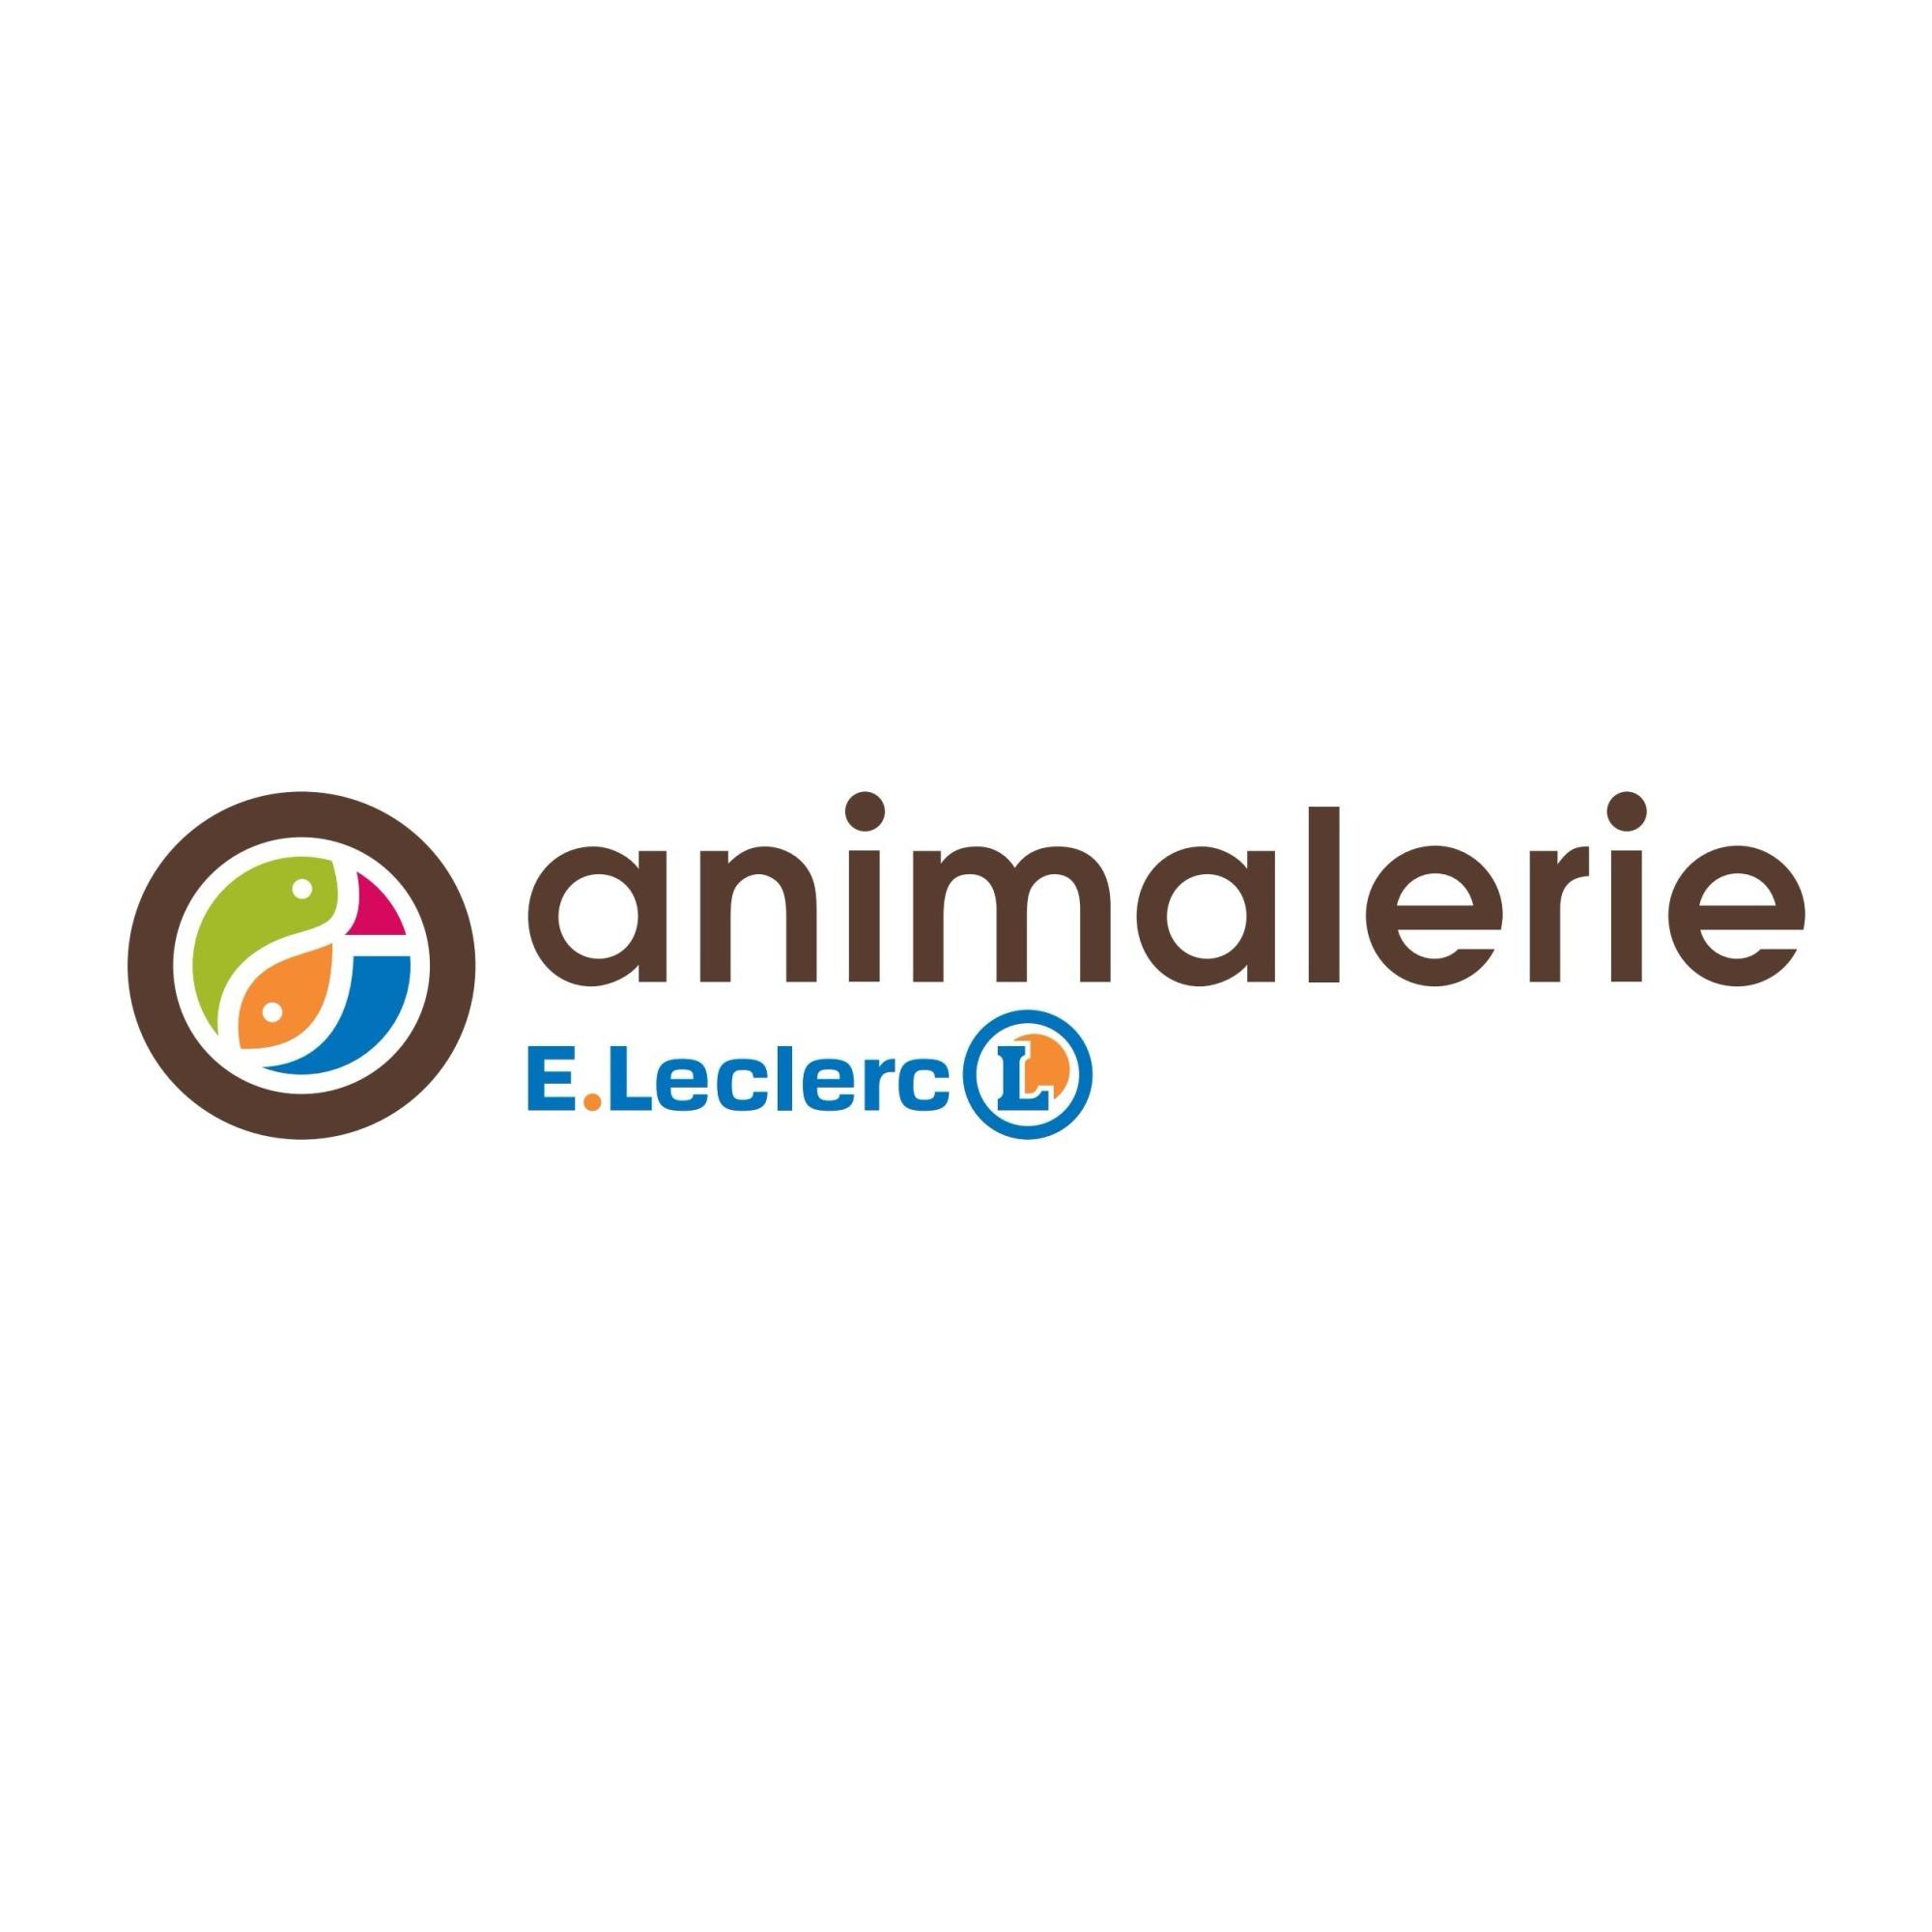 E.leclerc Animalerie Le Pian Médoc